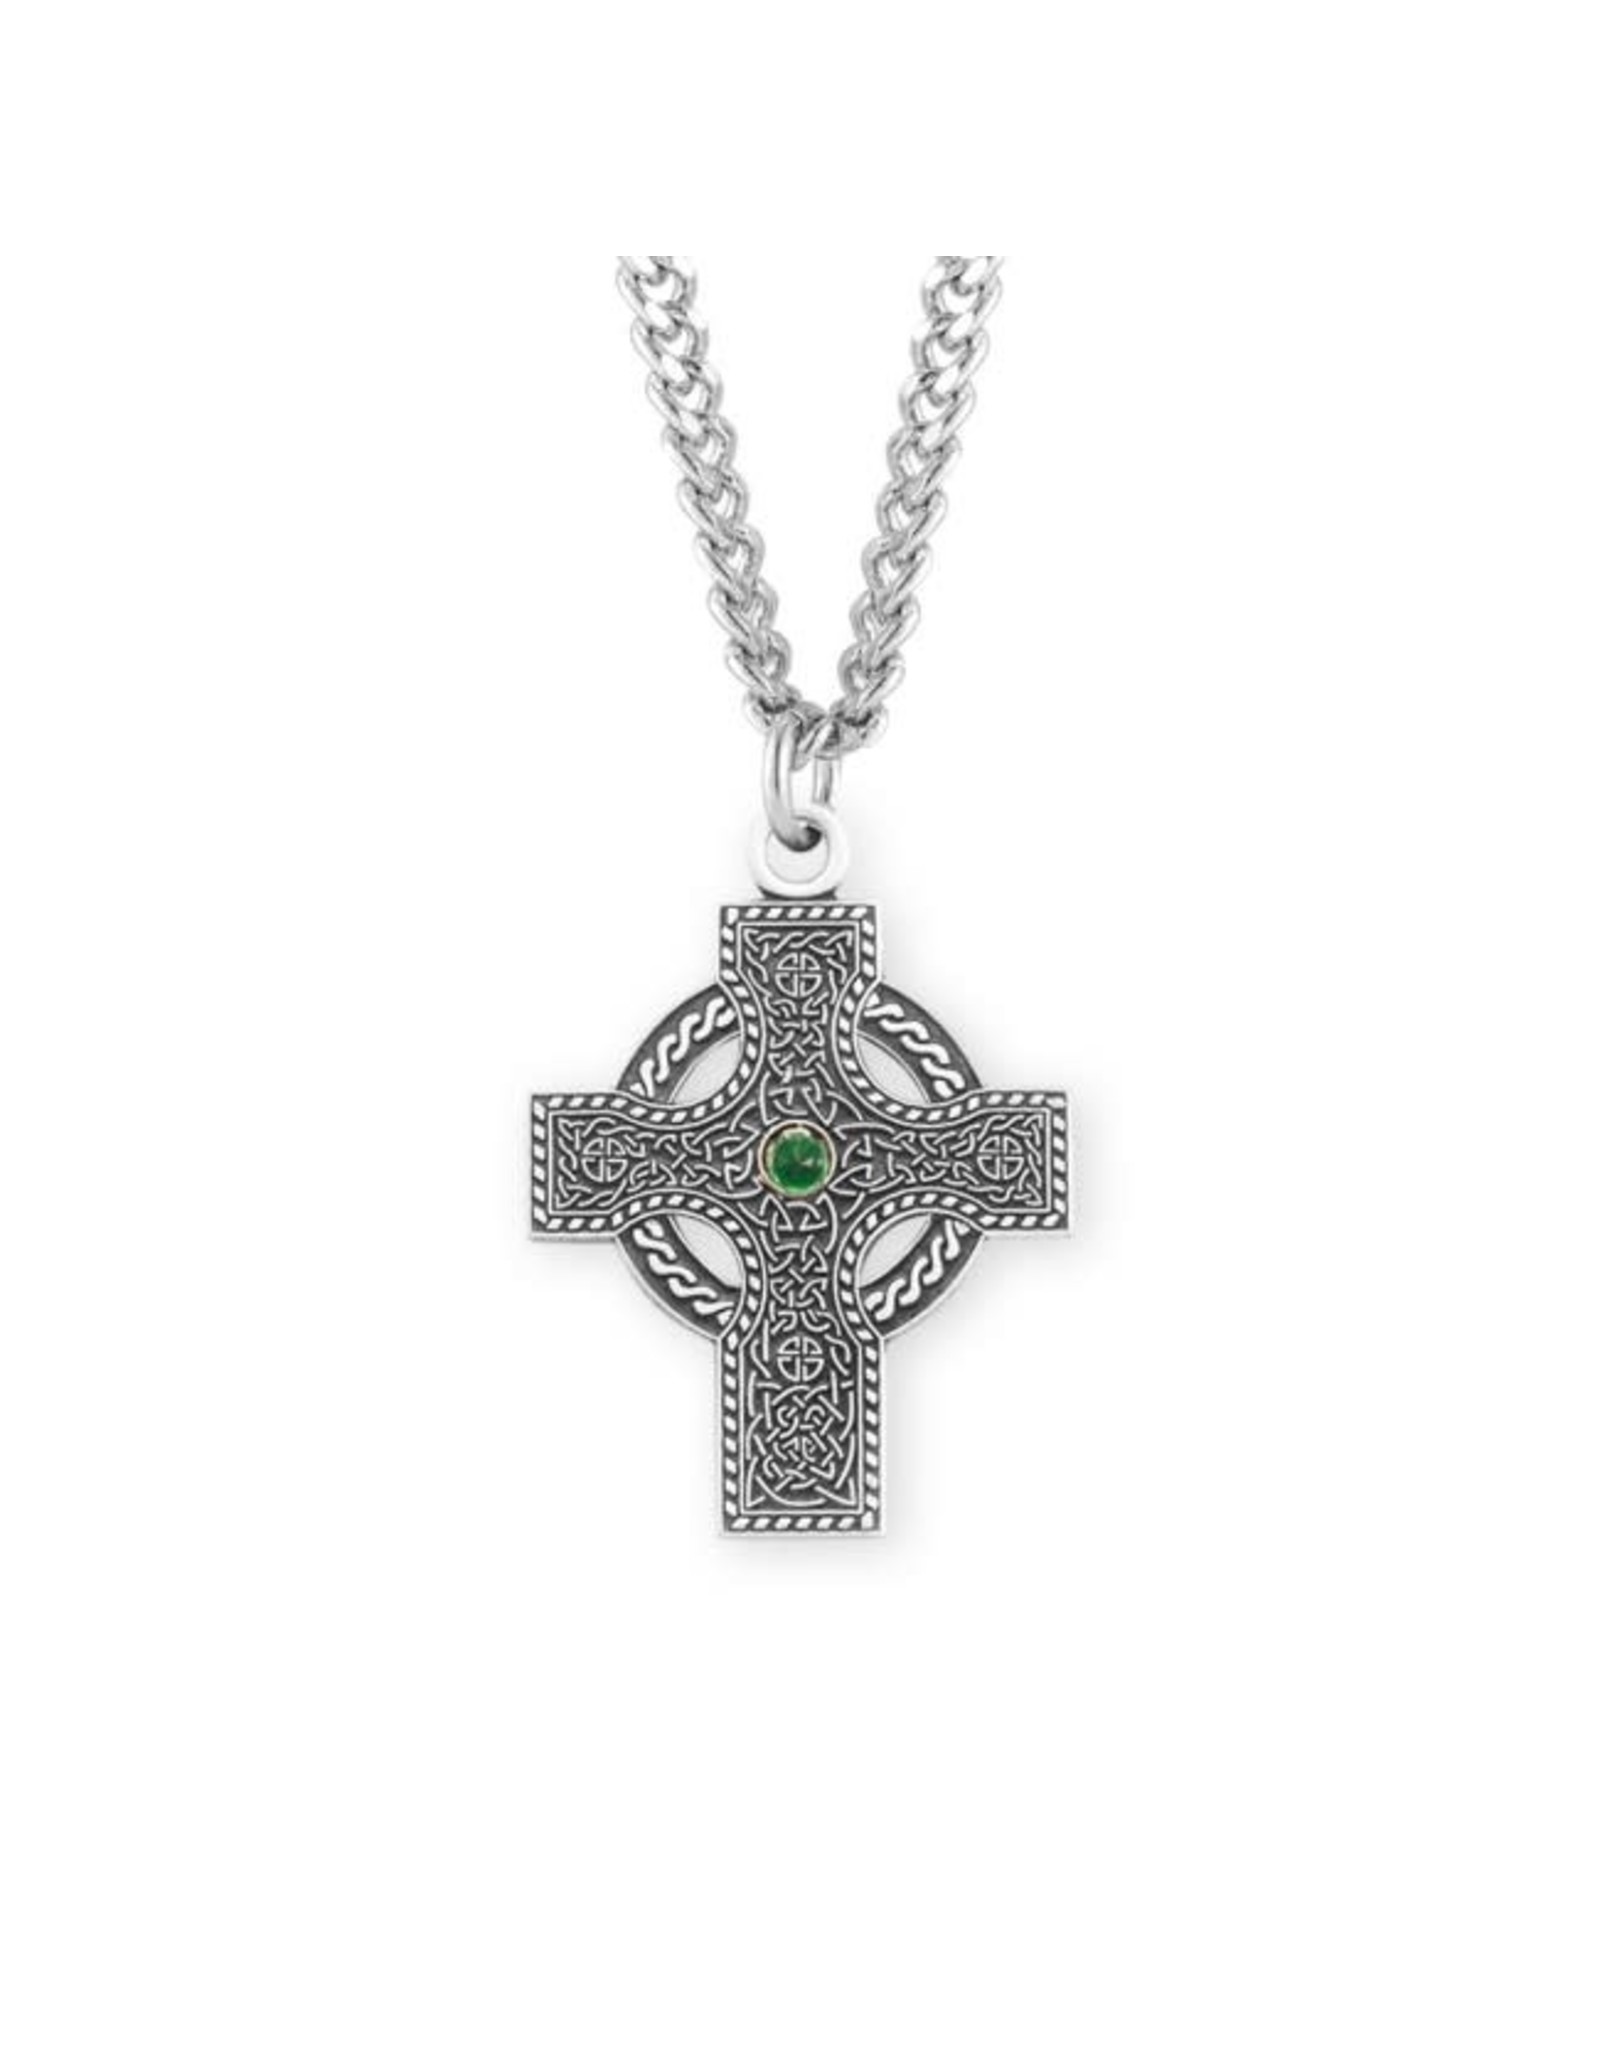 HMH Celtic Cross Medal, Emerald Center, Sterling Silver, 24" Chain